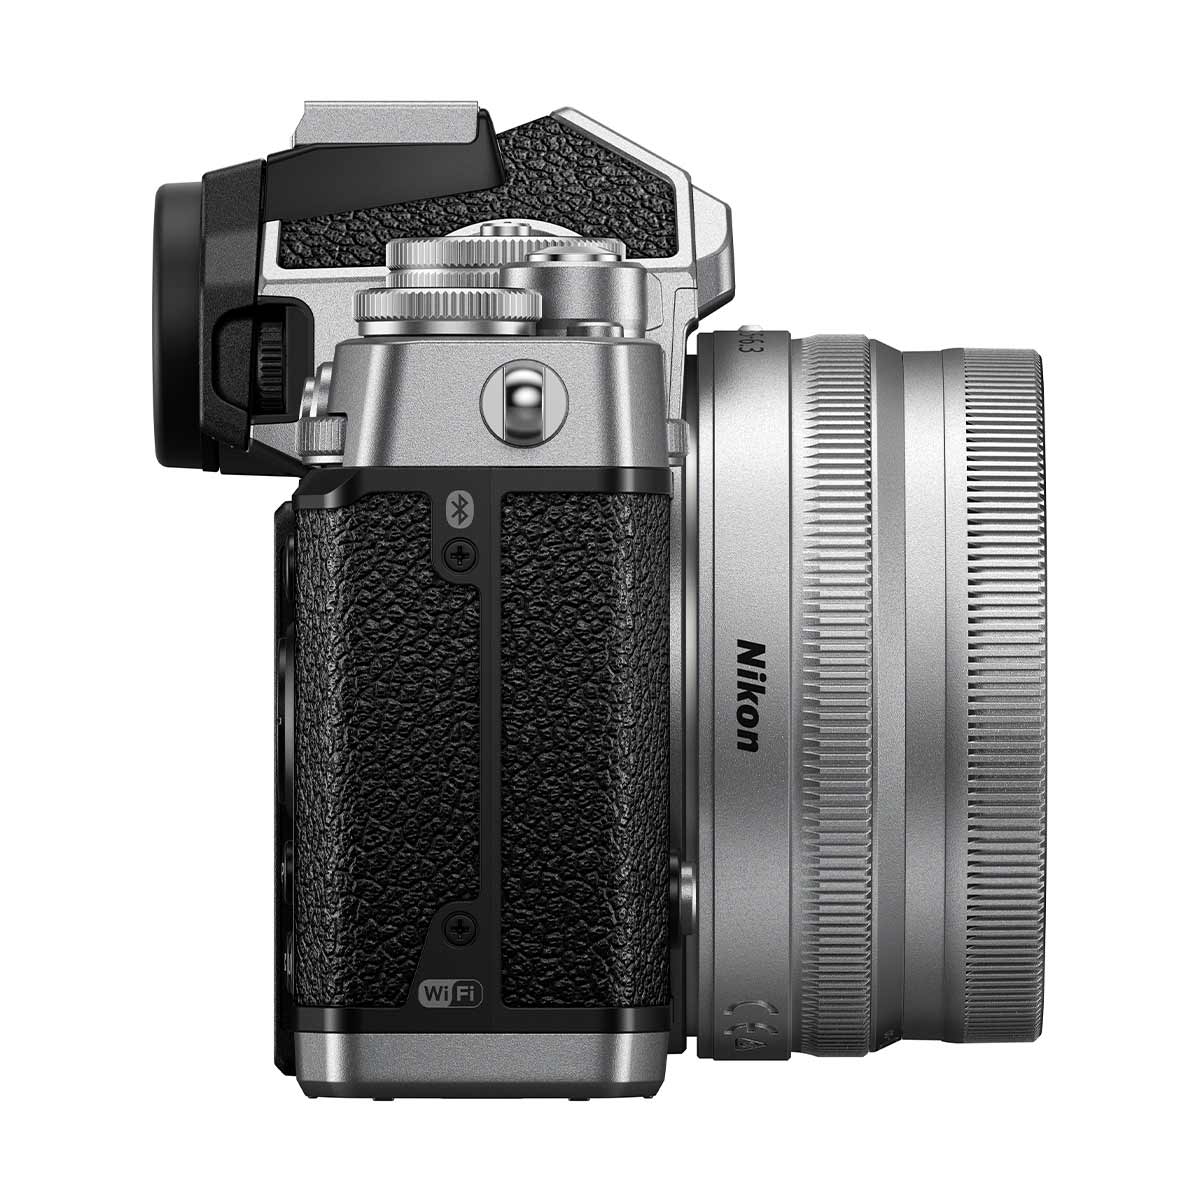 Nikon Z fc Mirrorless Camera w/ Nikon Z DX 16-50mm VR Lens